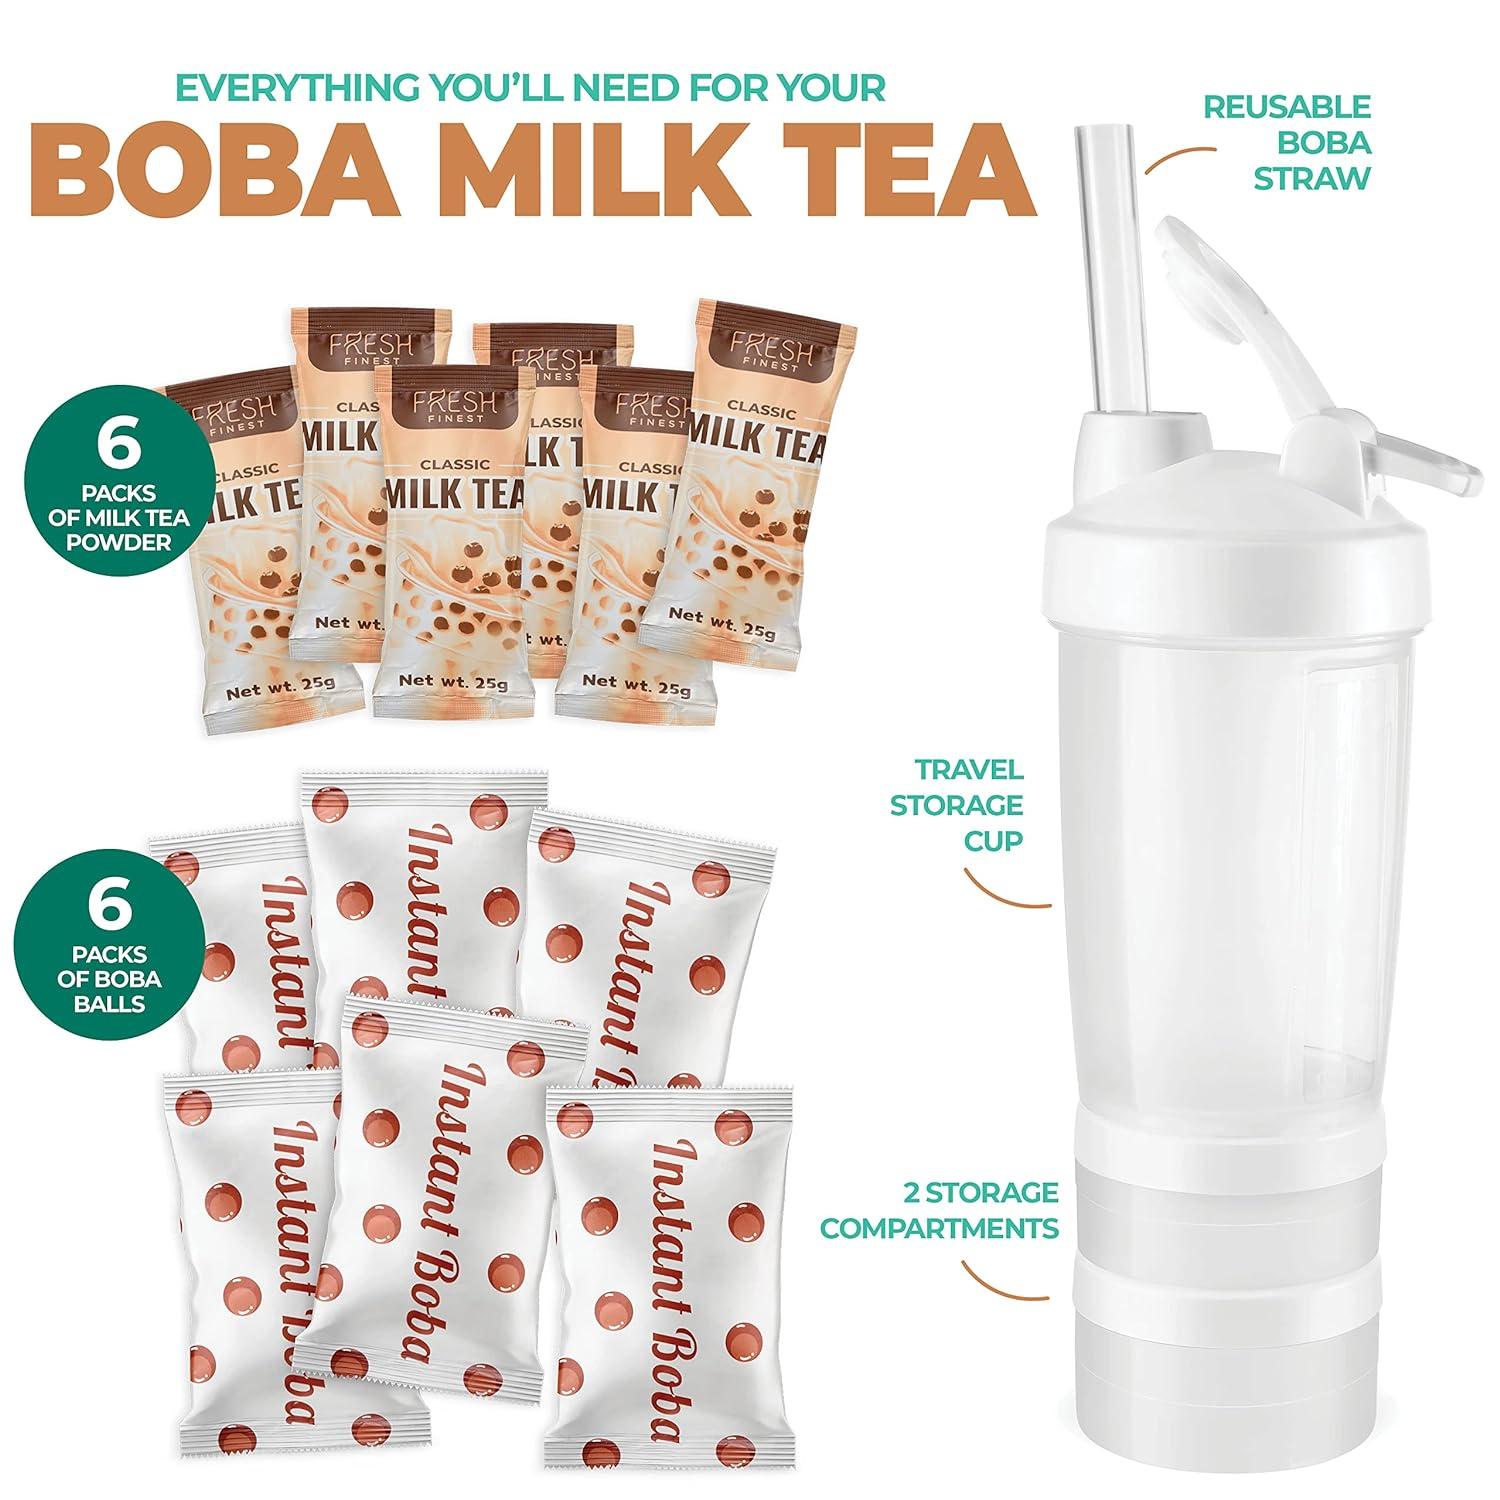 Reusable Boba Bottle, Built-in Bubble Tea Straw